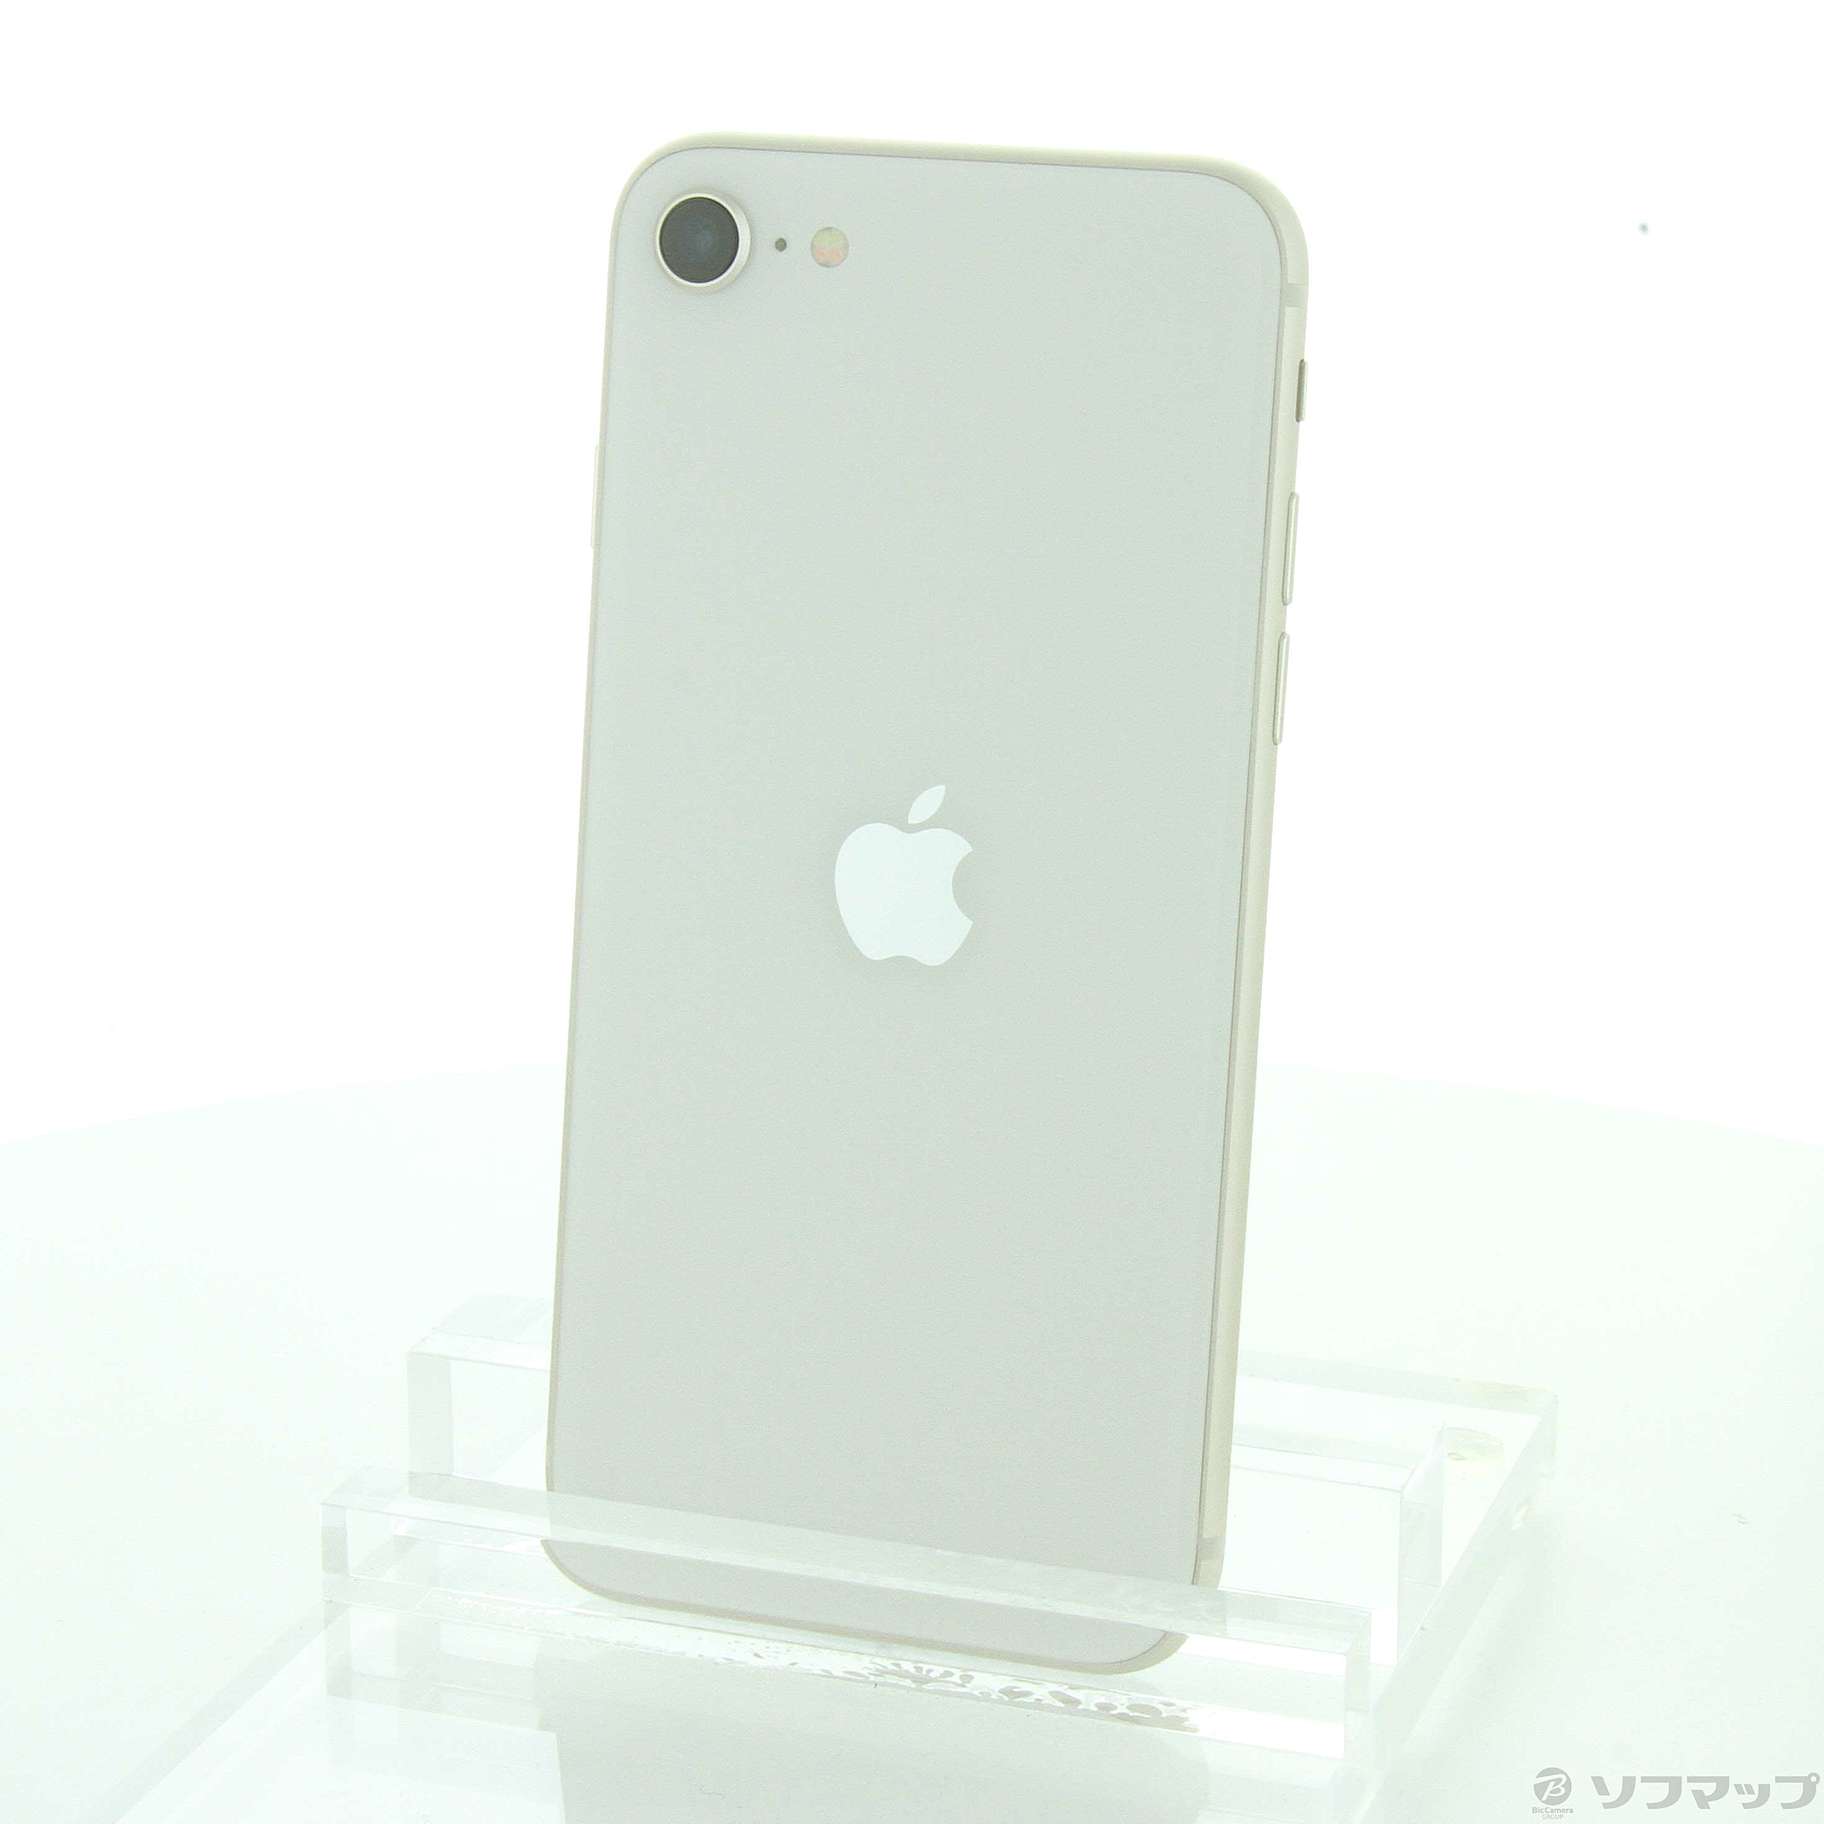 iPhone SE (第3世代) スターライト 128 GB SIMフリー - mycoolbin.com